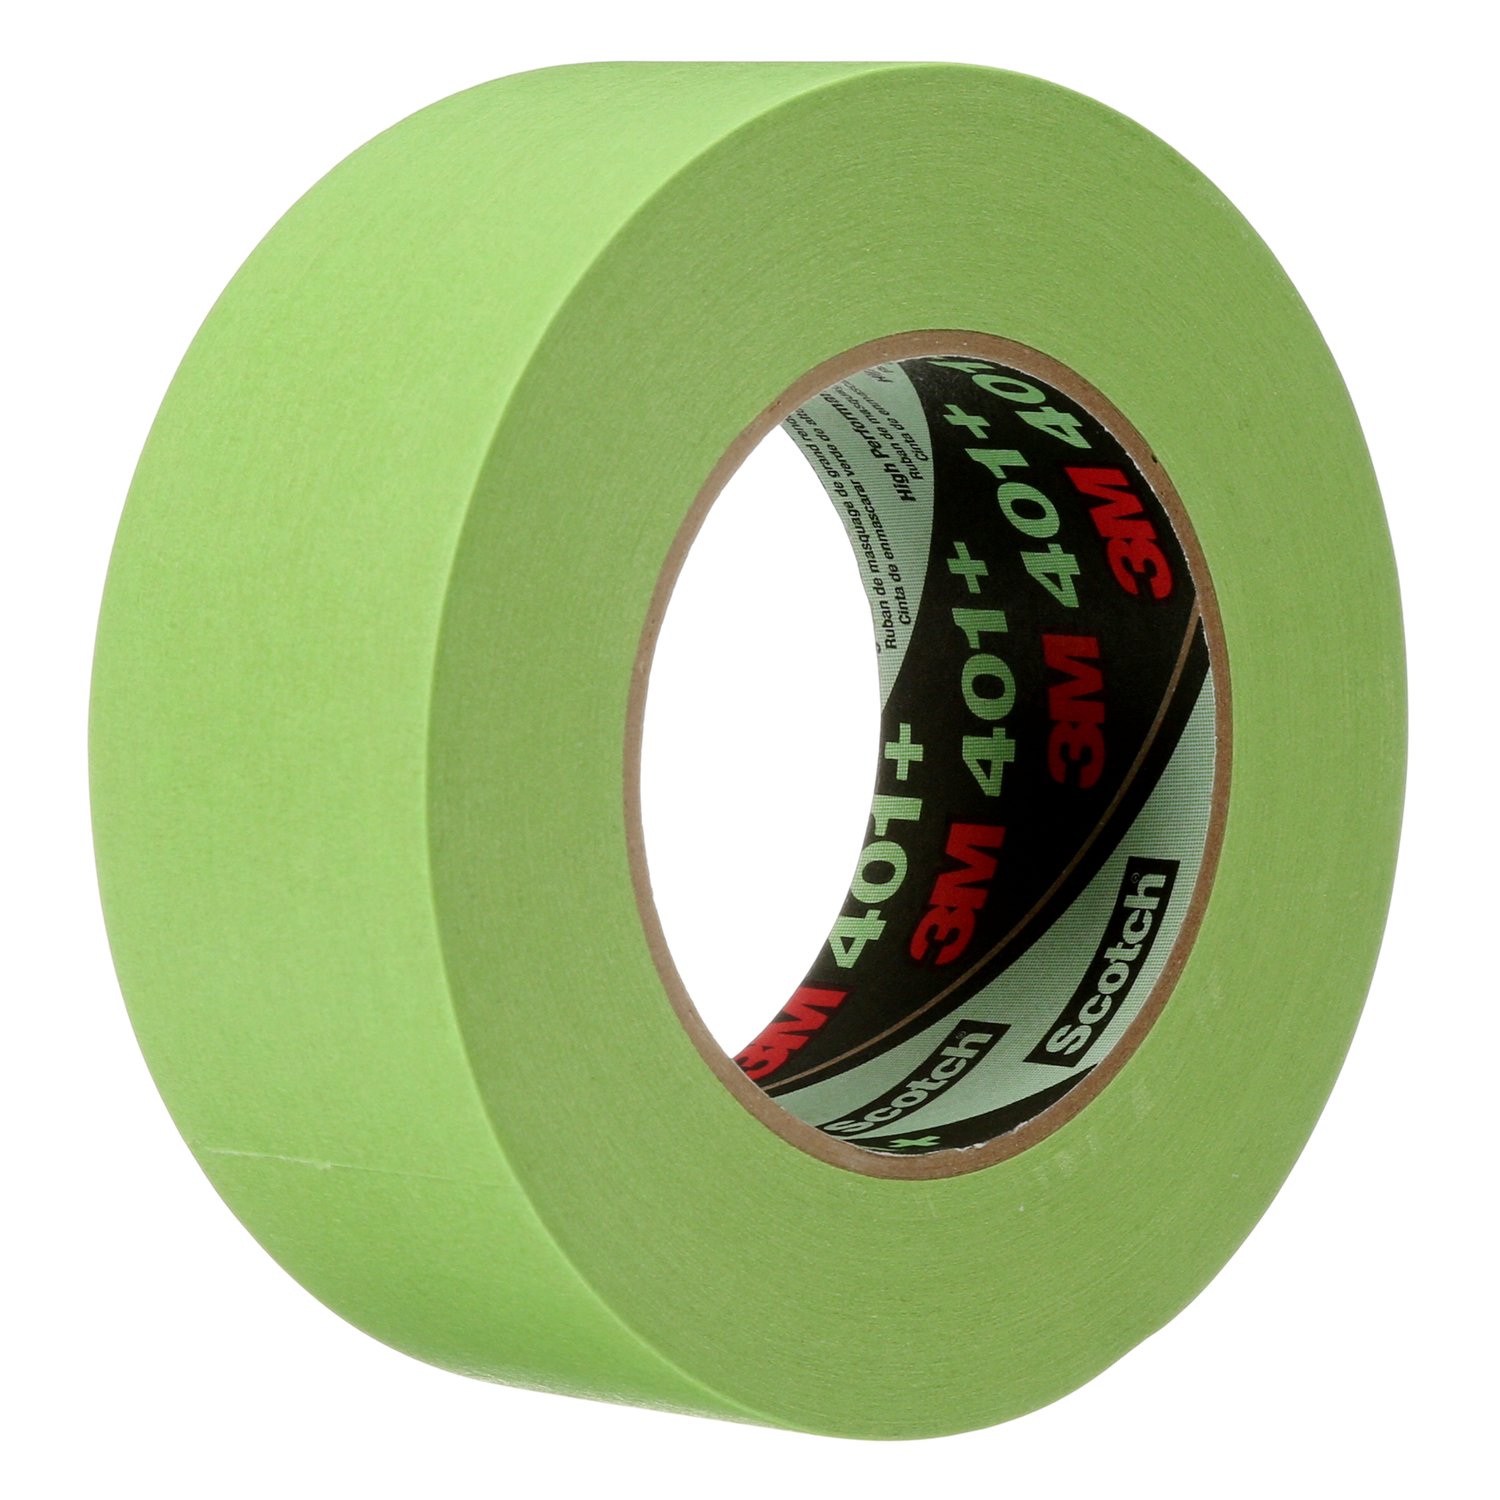 7000124898 - 3M High Performance Green Masking Tape 401+, 48 mm x 55 m 6.7 mil, 12
Roll/Case